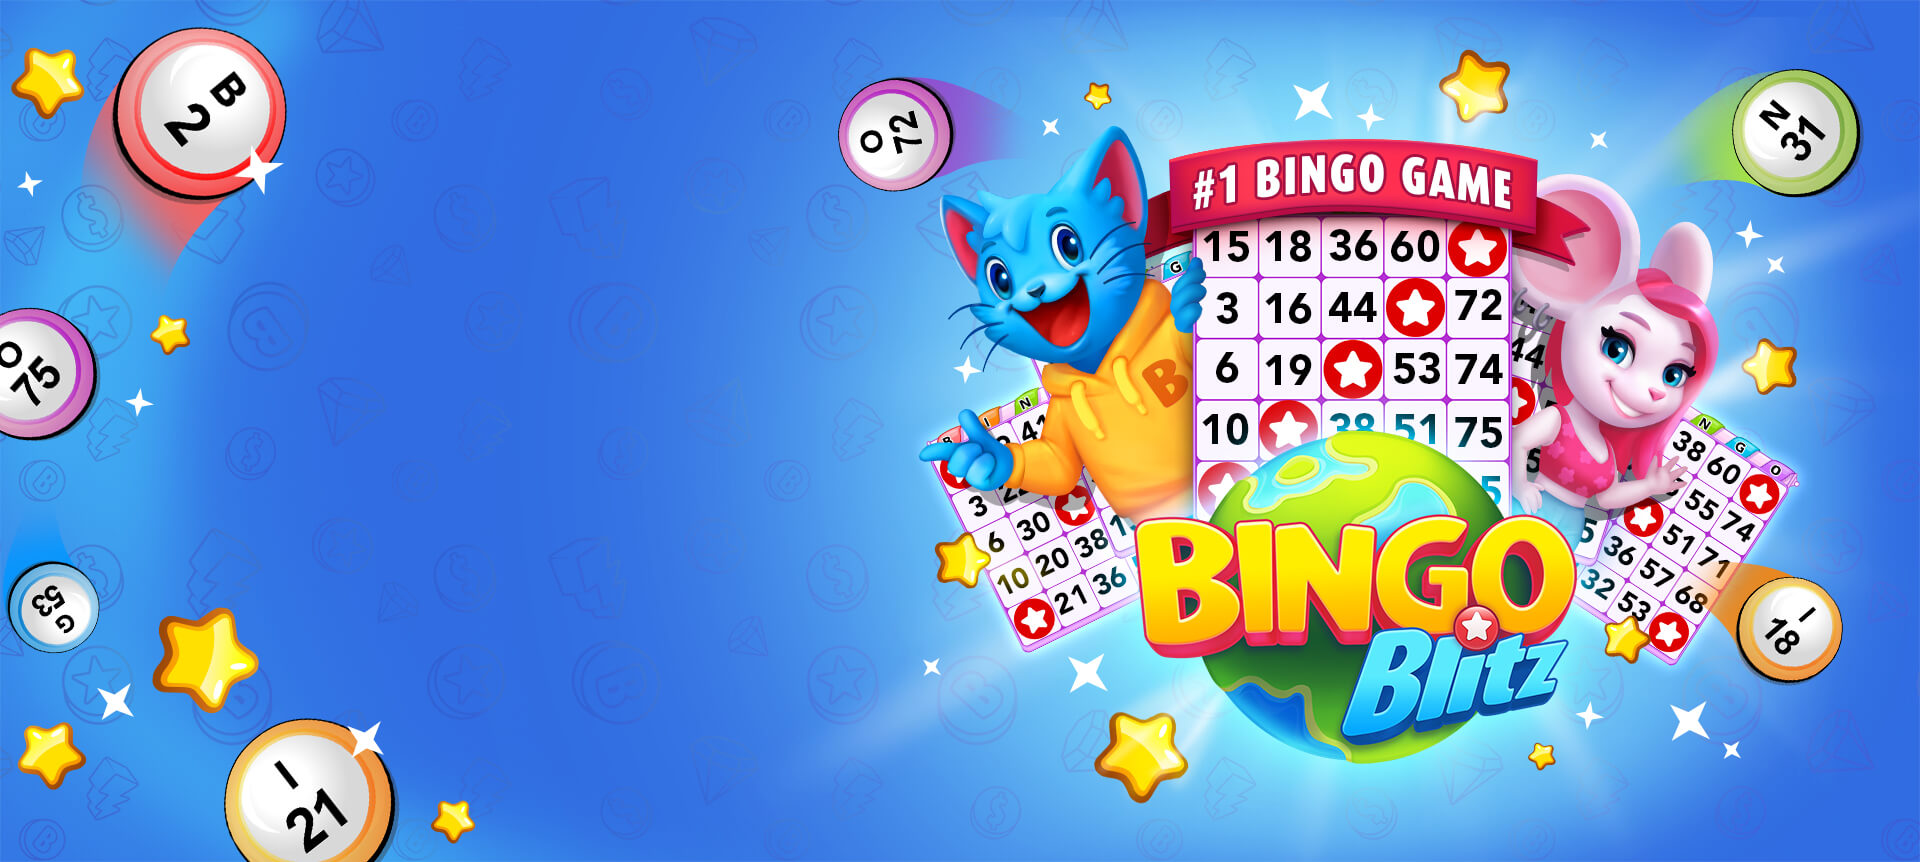 Bingo Blitz Free Credits 